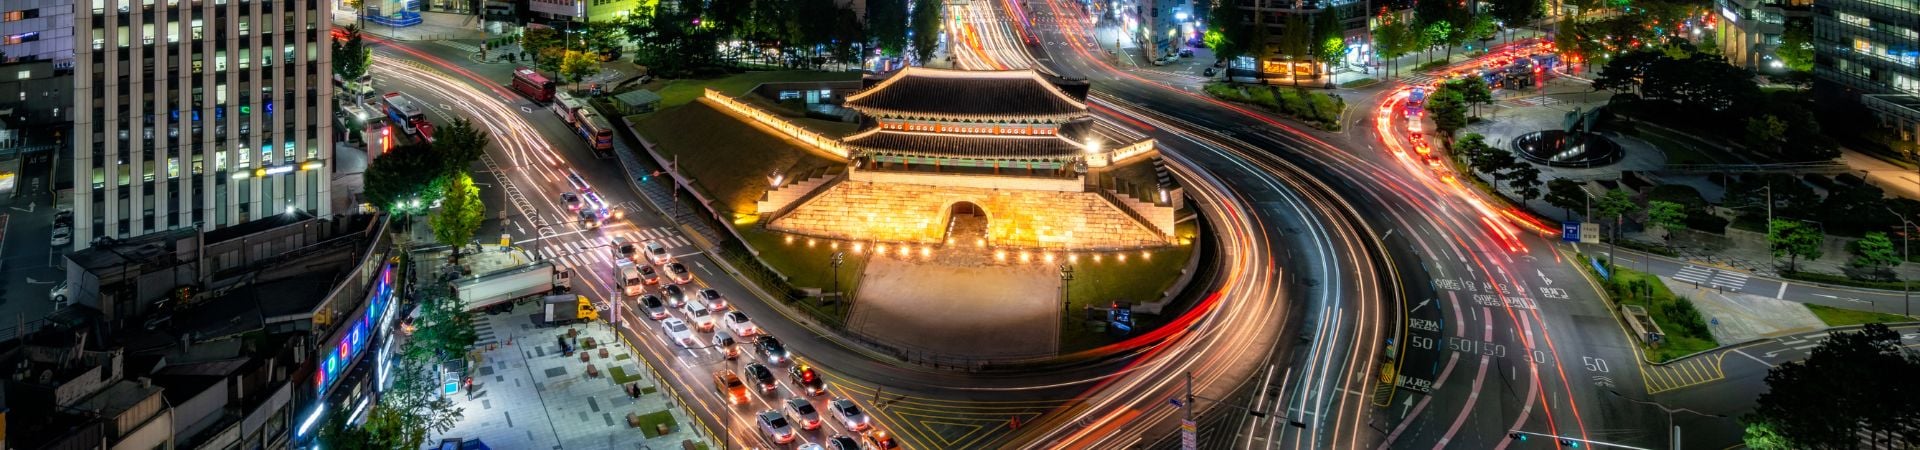 Image of World Heritage in Korea